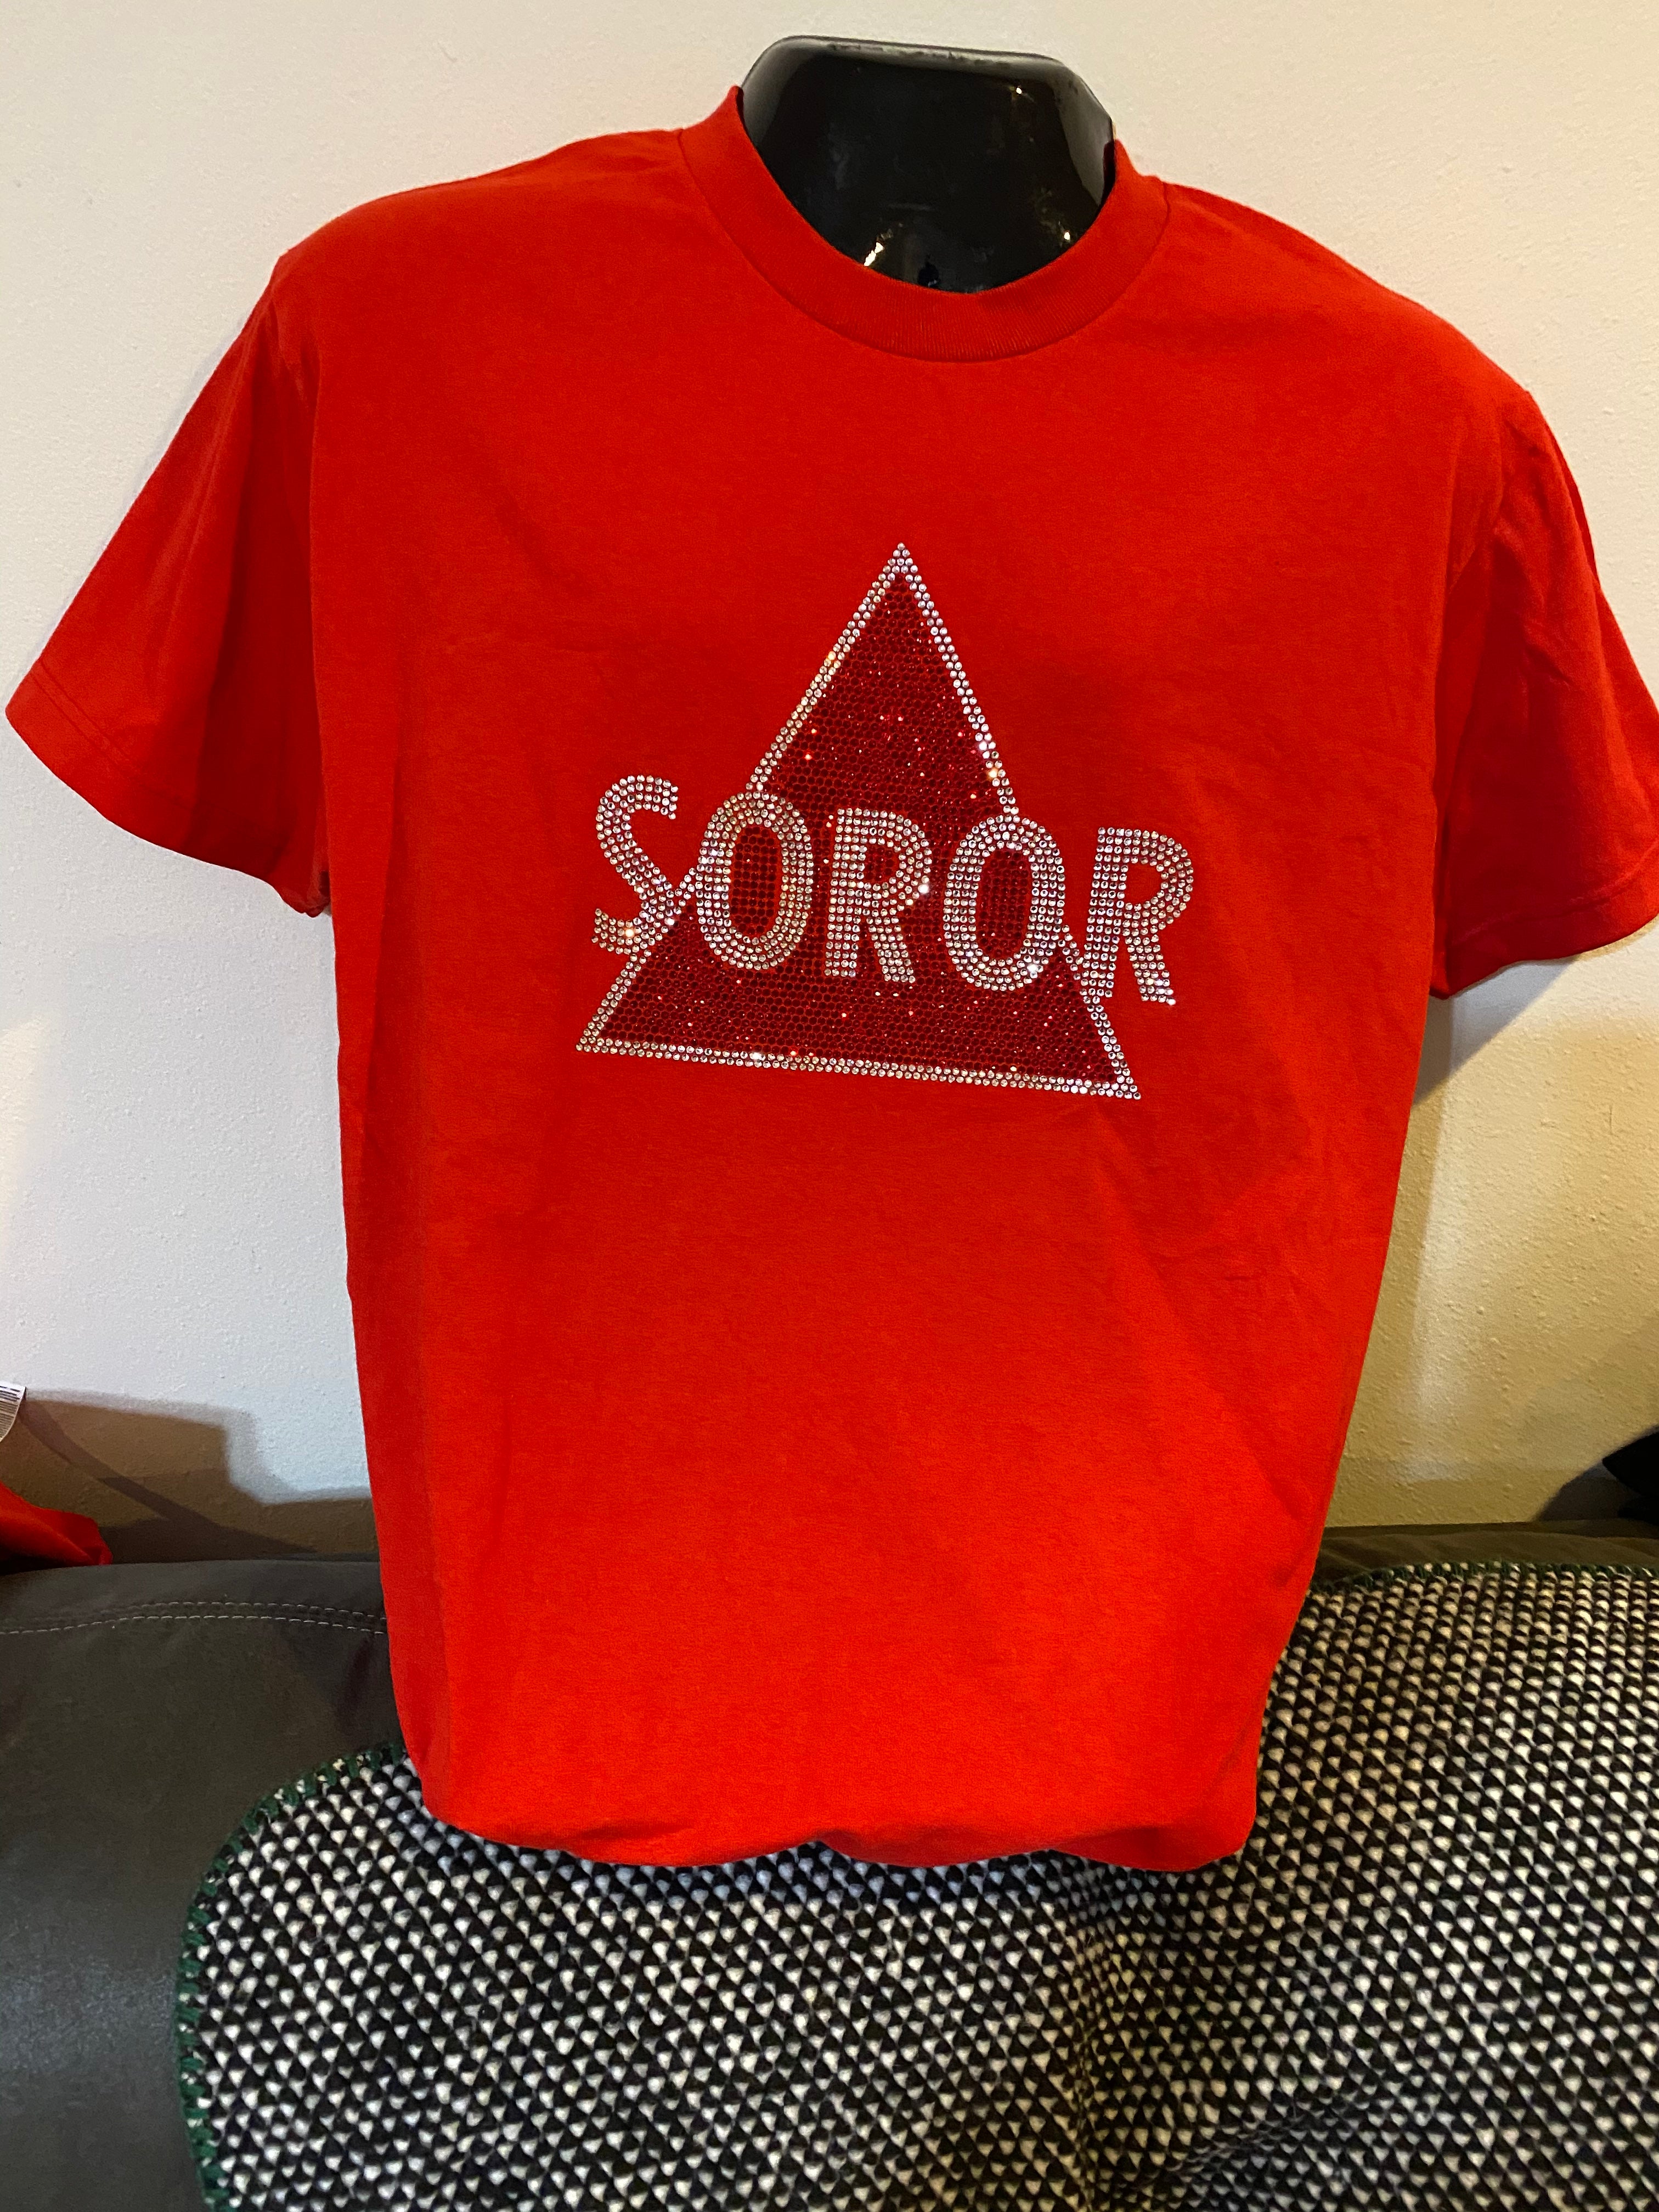 Delta Soror T-shirt in Men’s sizes